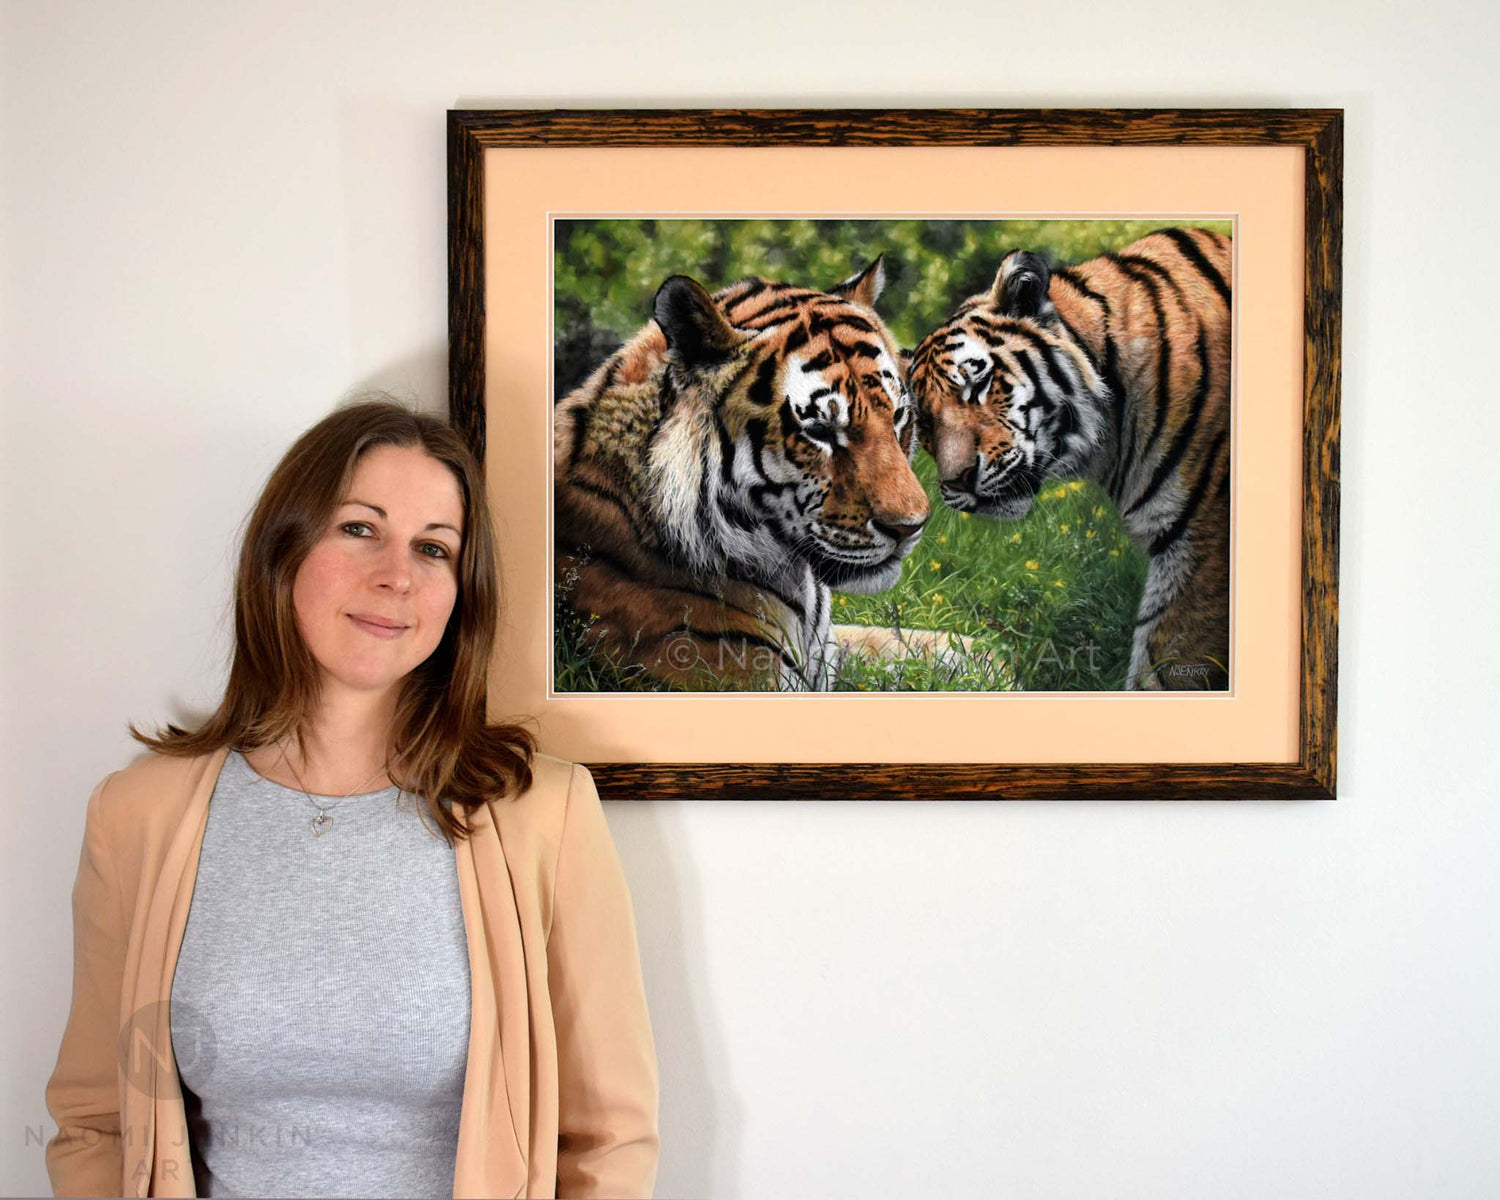 Wildlife artist Naomi Jenkin with her framed tiger painting "Allegiance".